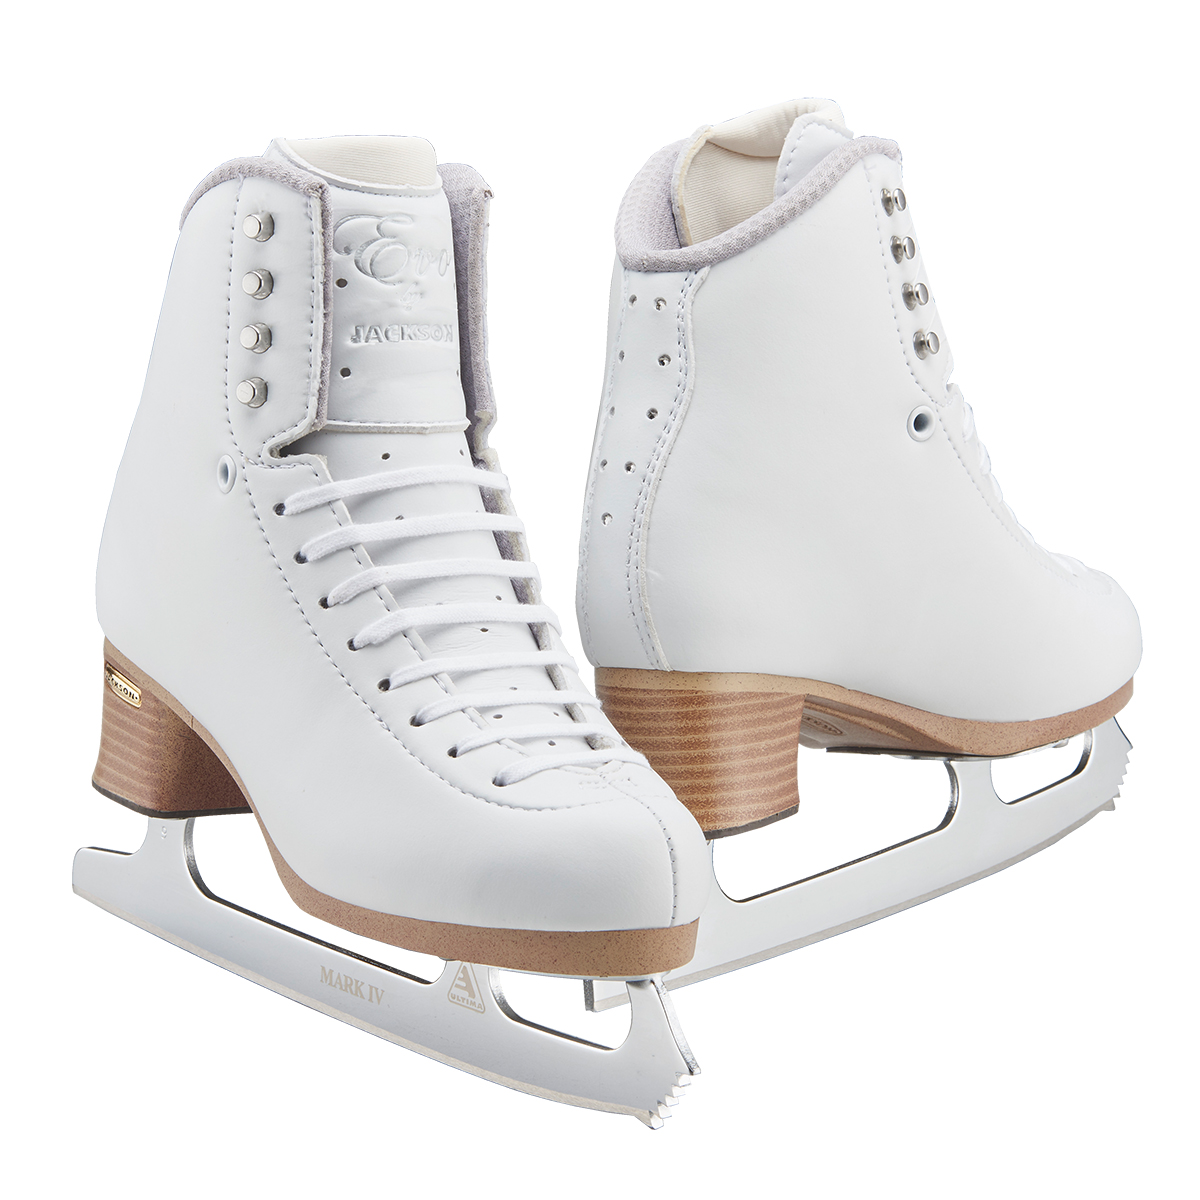 Jackson Ice Skates Evo Fusion Misses FS2021 with Mark IV Blade - image 1 of 3